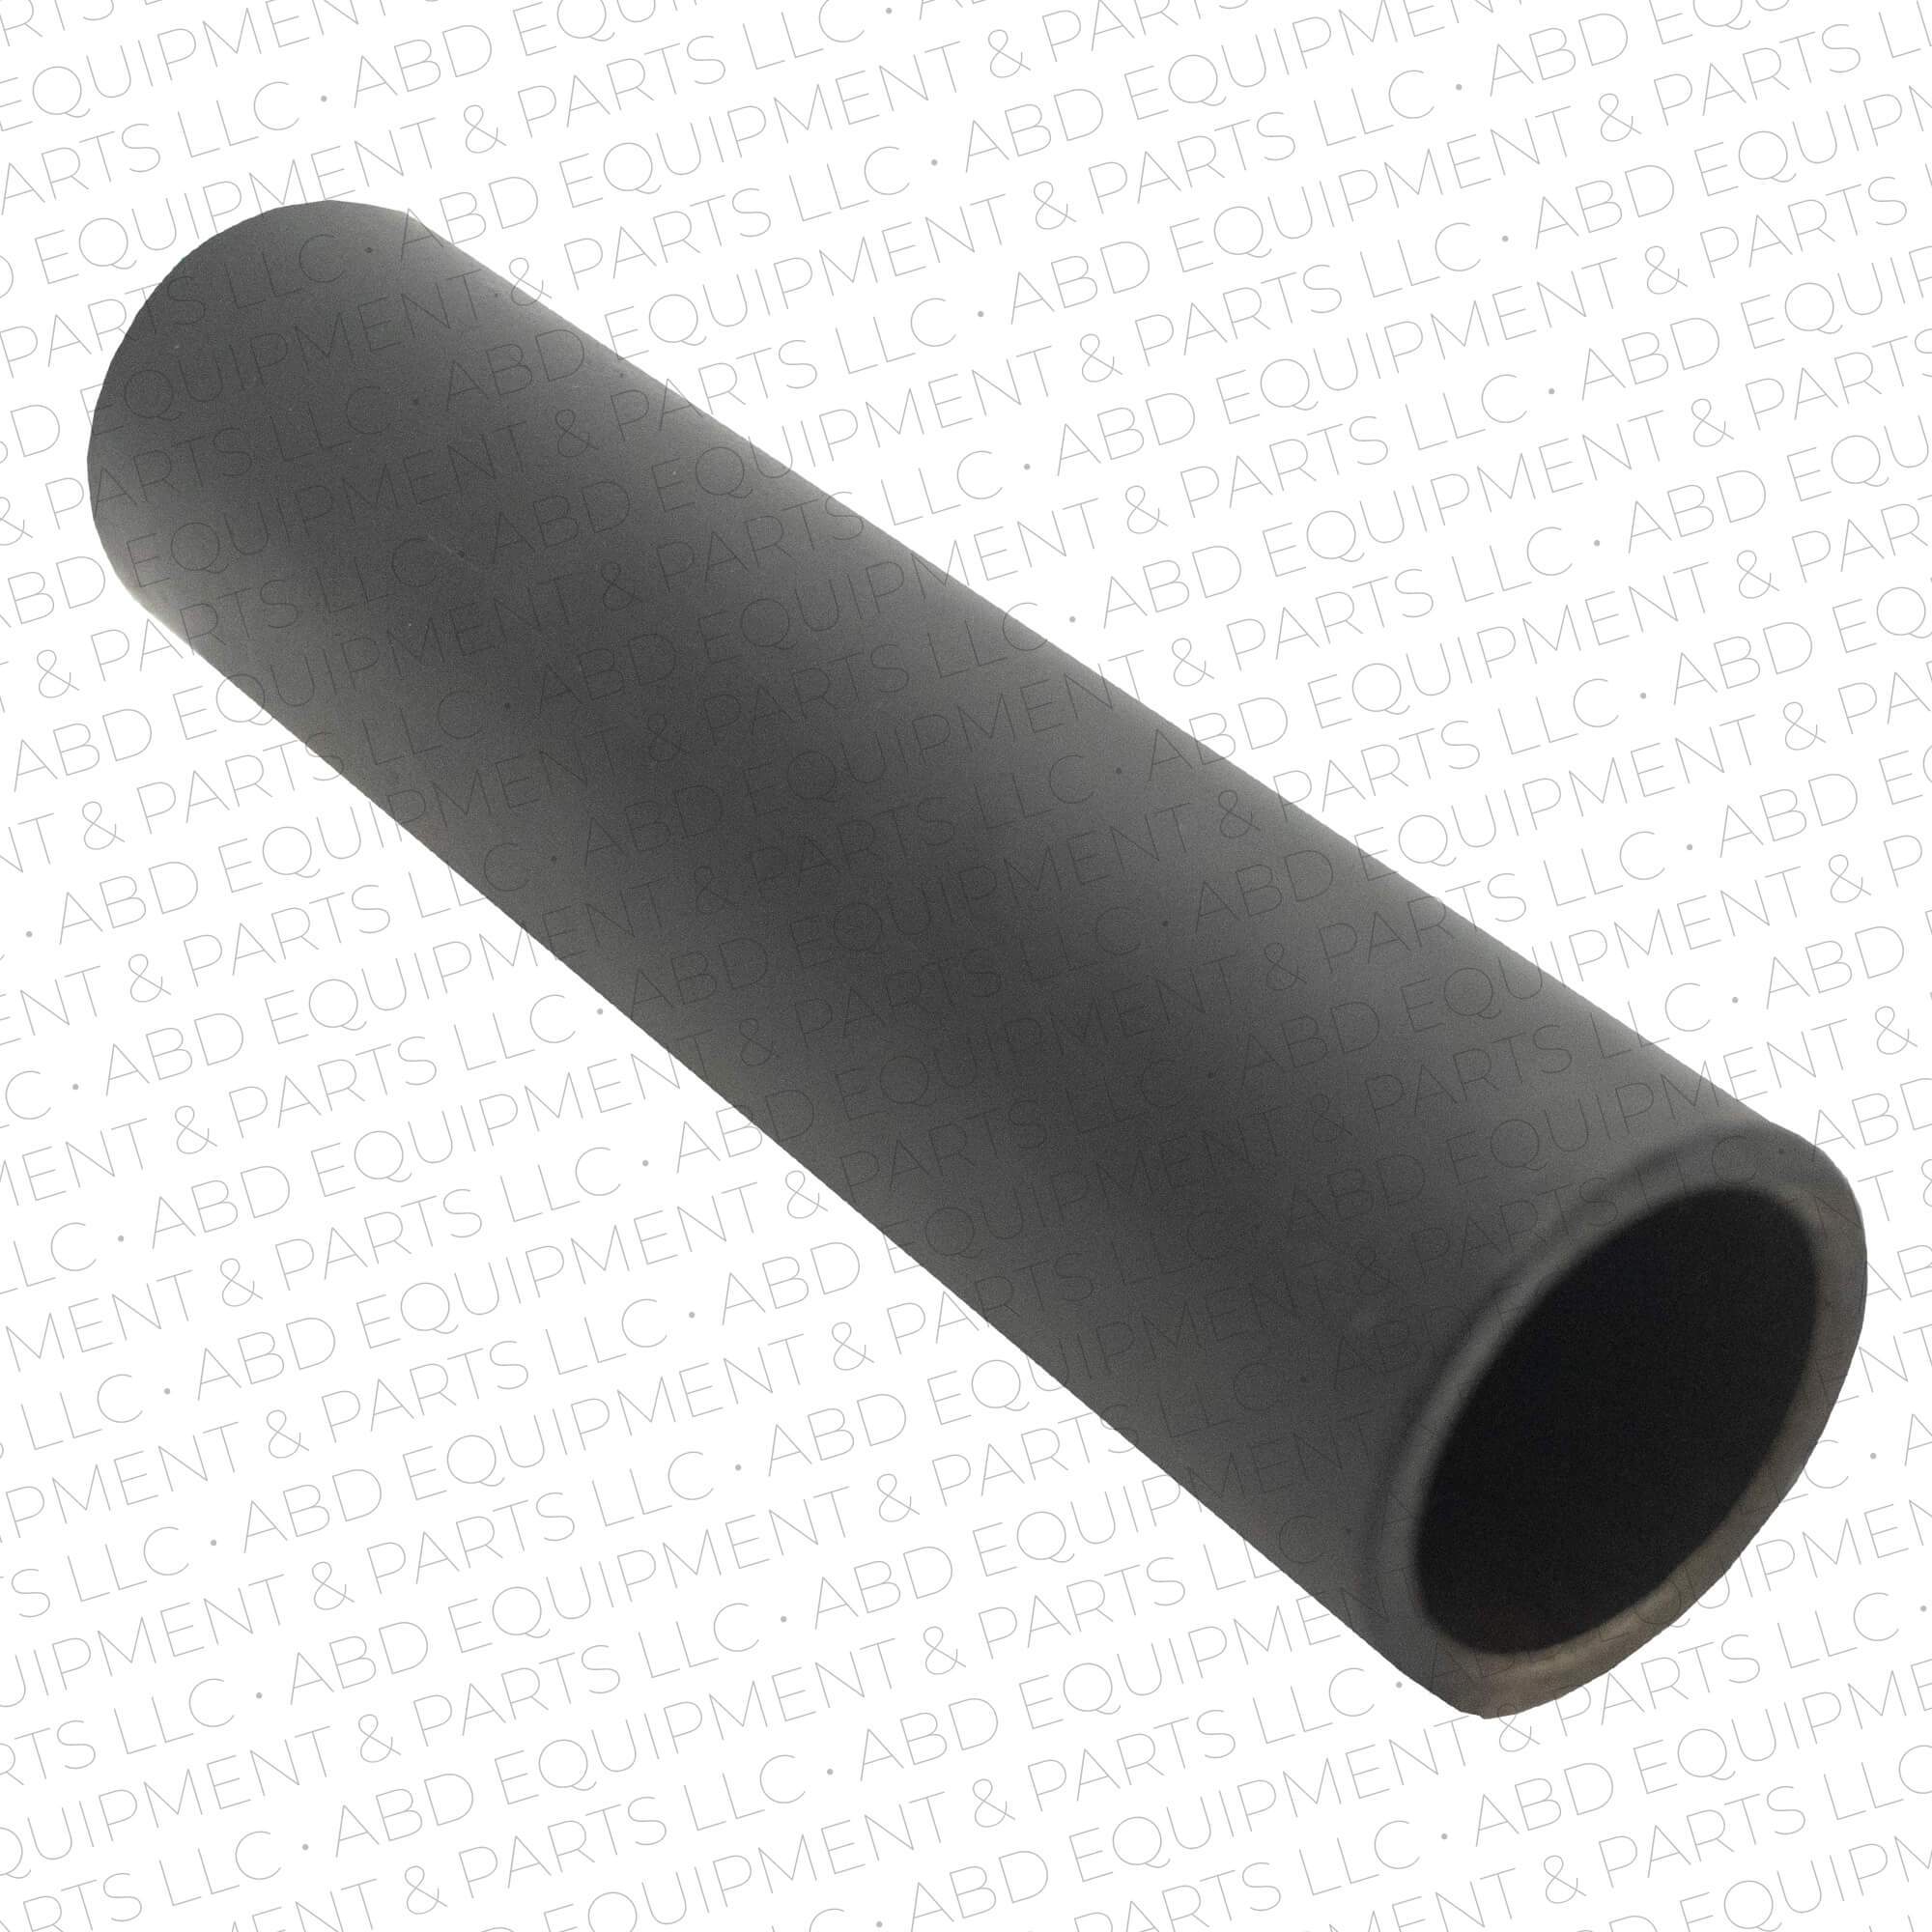 Bearing Sleeve 2.188 inch OD for 1.75inch ID x 8.63 inch - Abd Equipment & Parts LLC